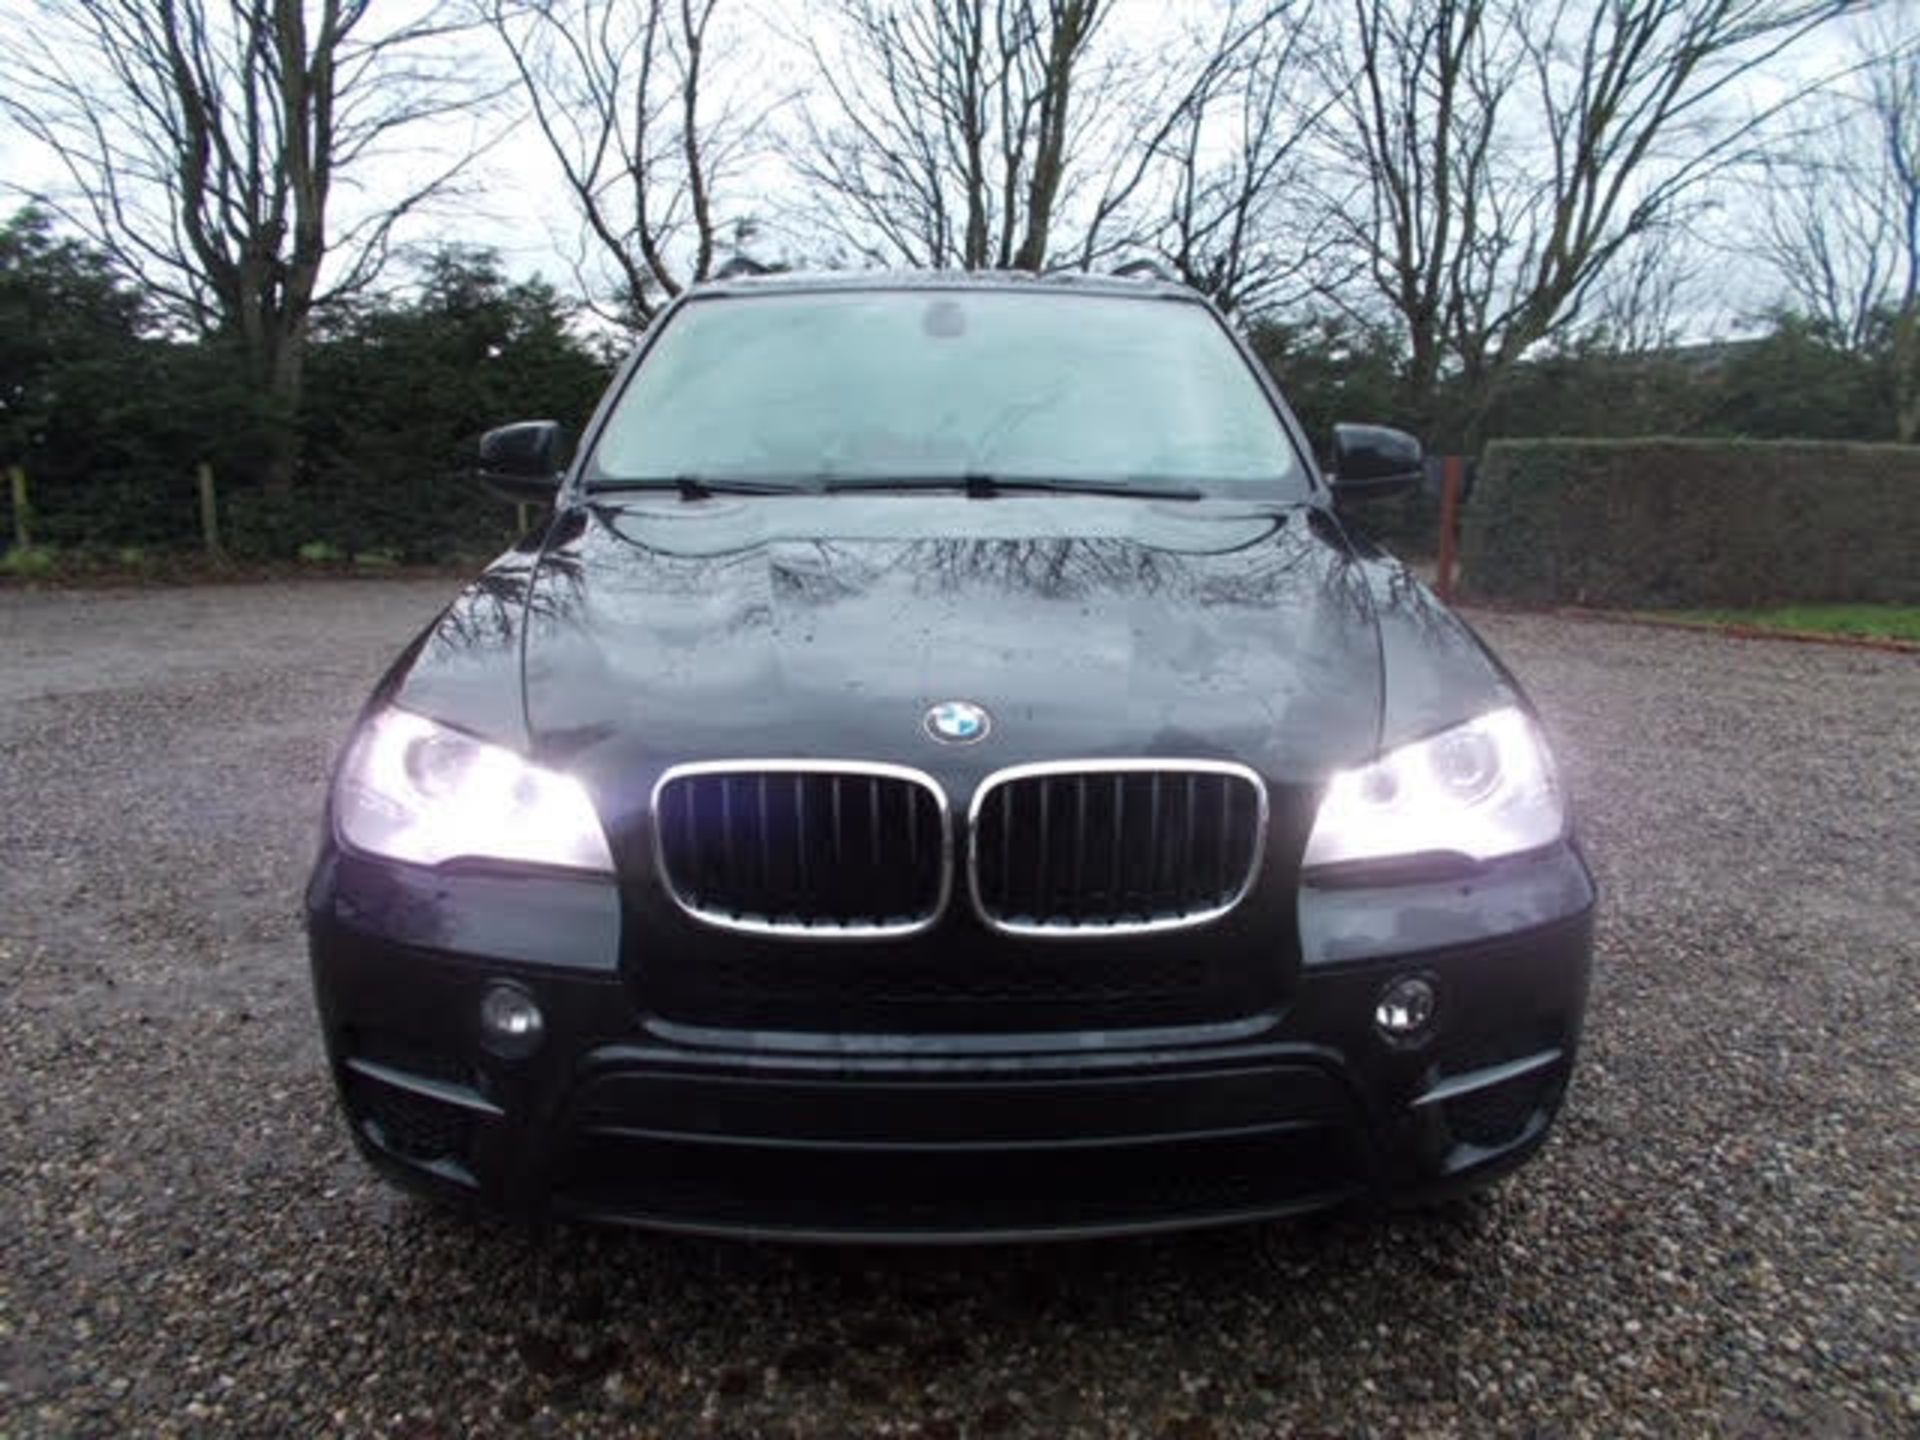 2012 (61) BMW X5 XDRIVE 35i, BLACK, PETROL, 98K MILES, AUTOMATIC, VDI CLEAR *NO VAT* - Image 3 of 25